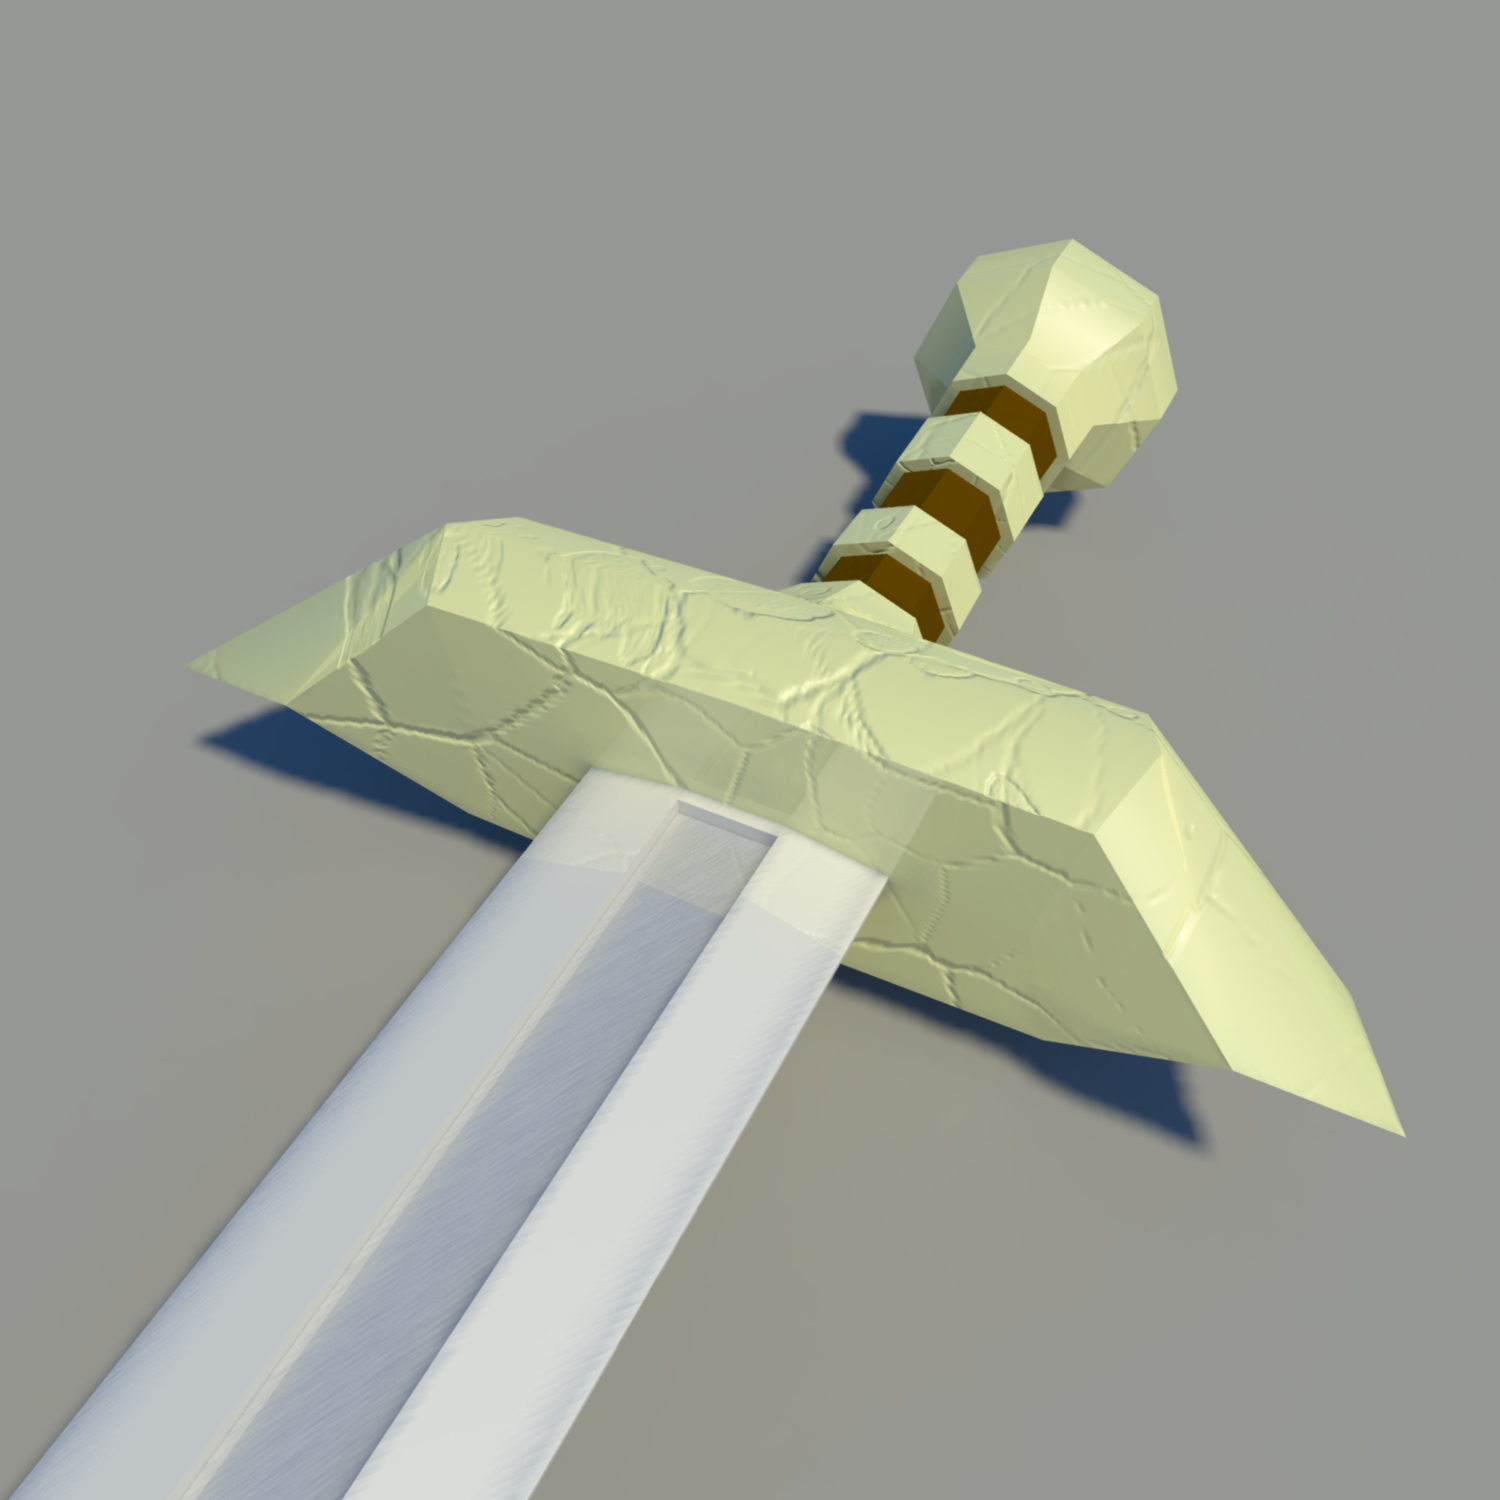 3D Medieval Stylelized sword model